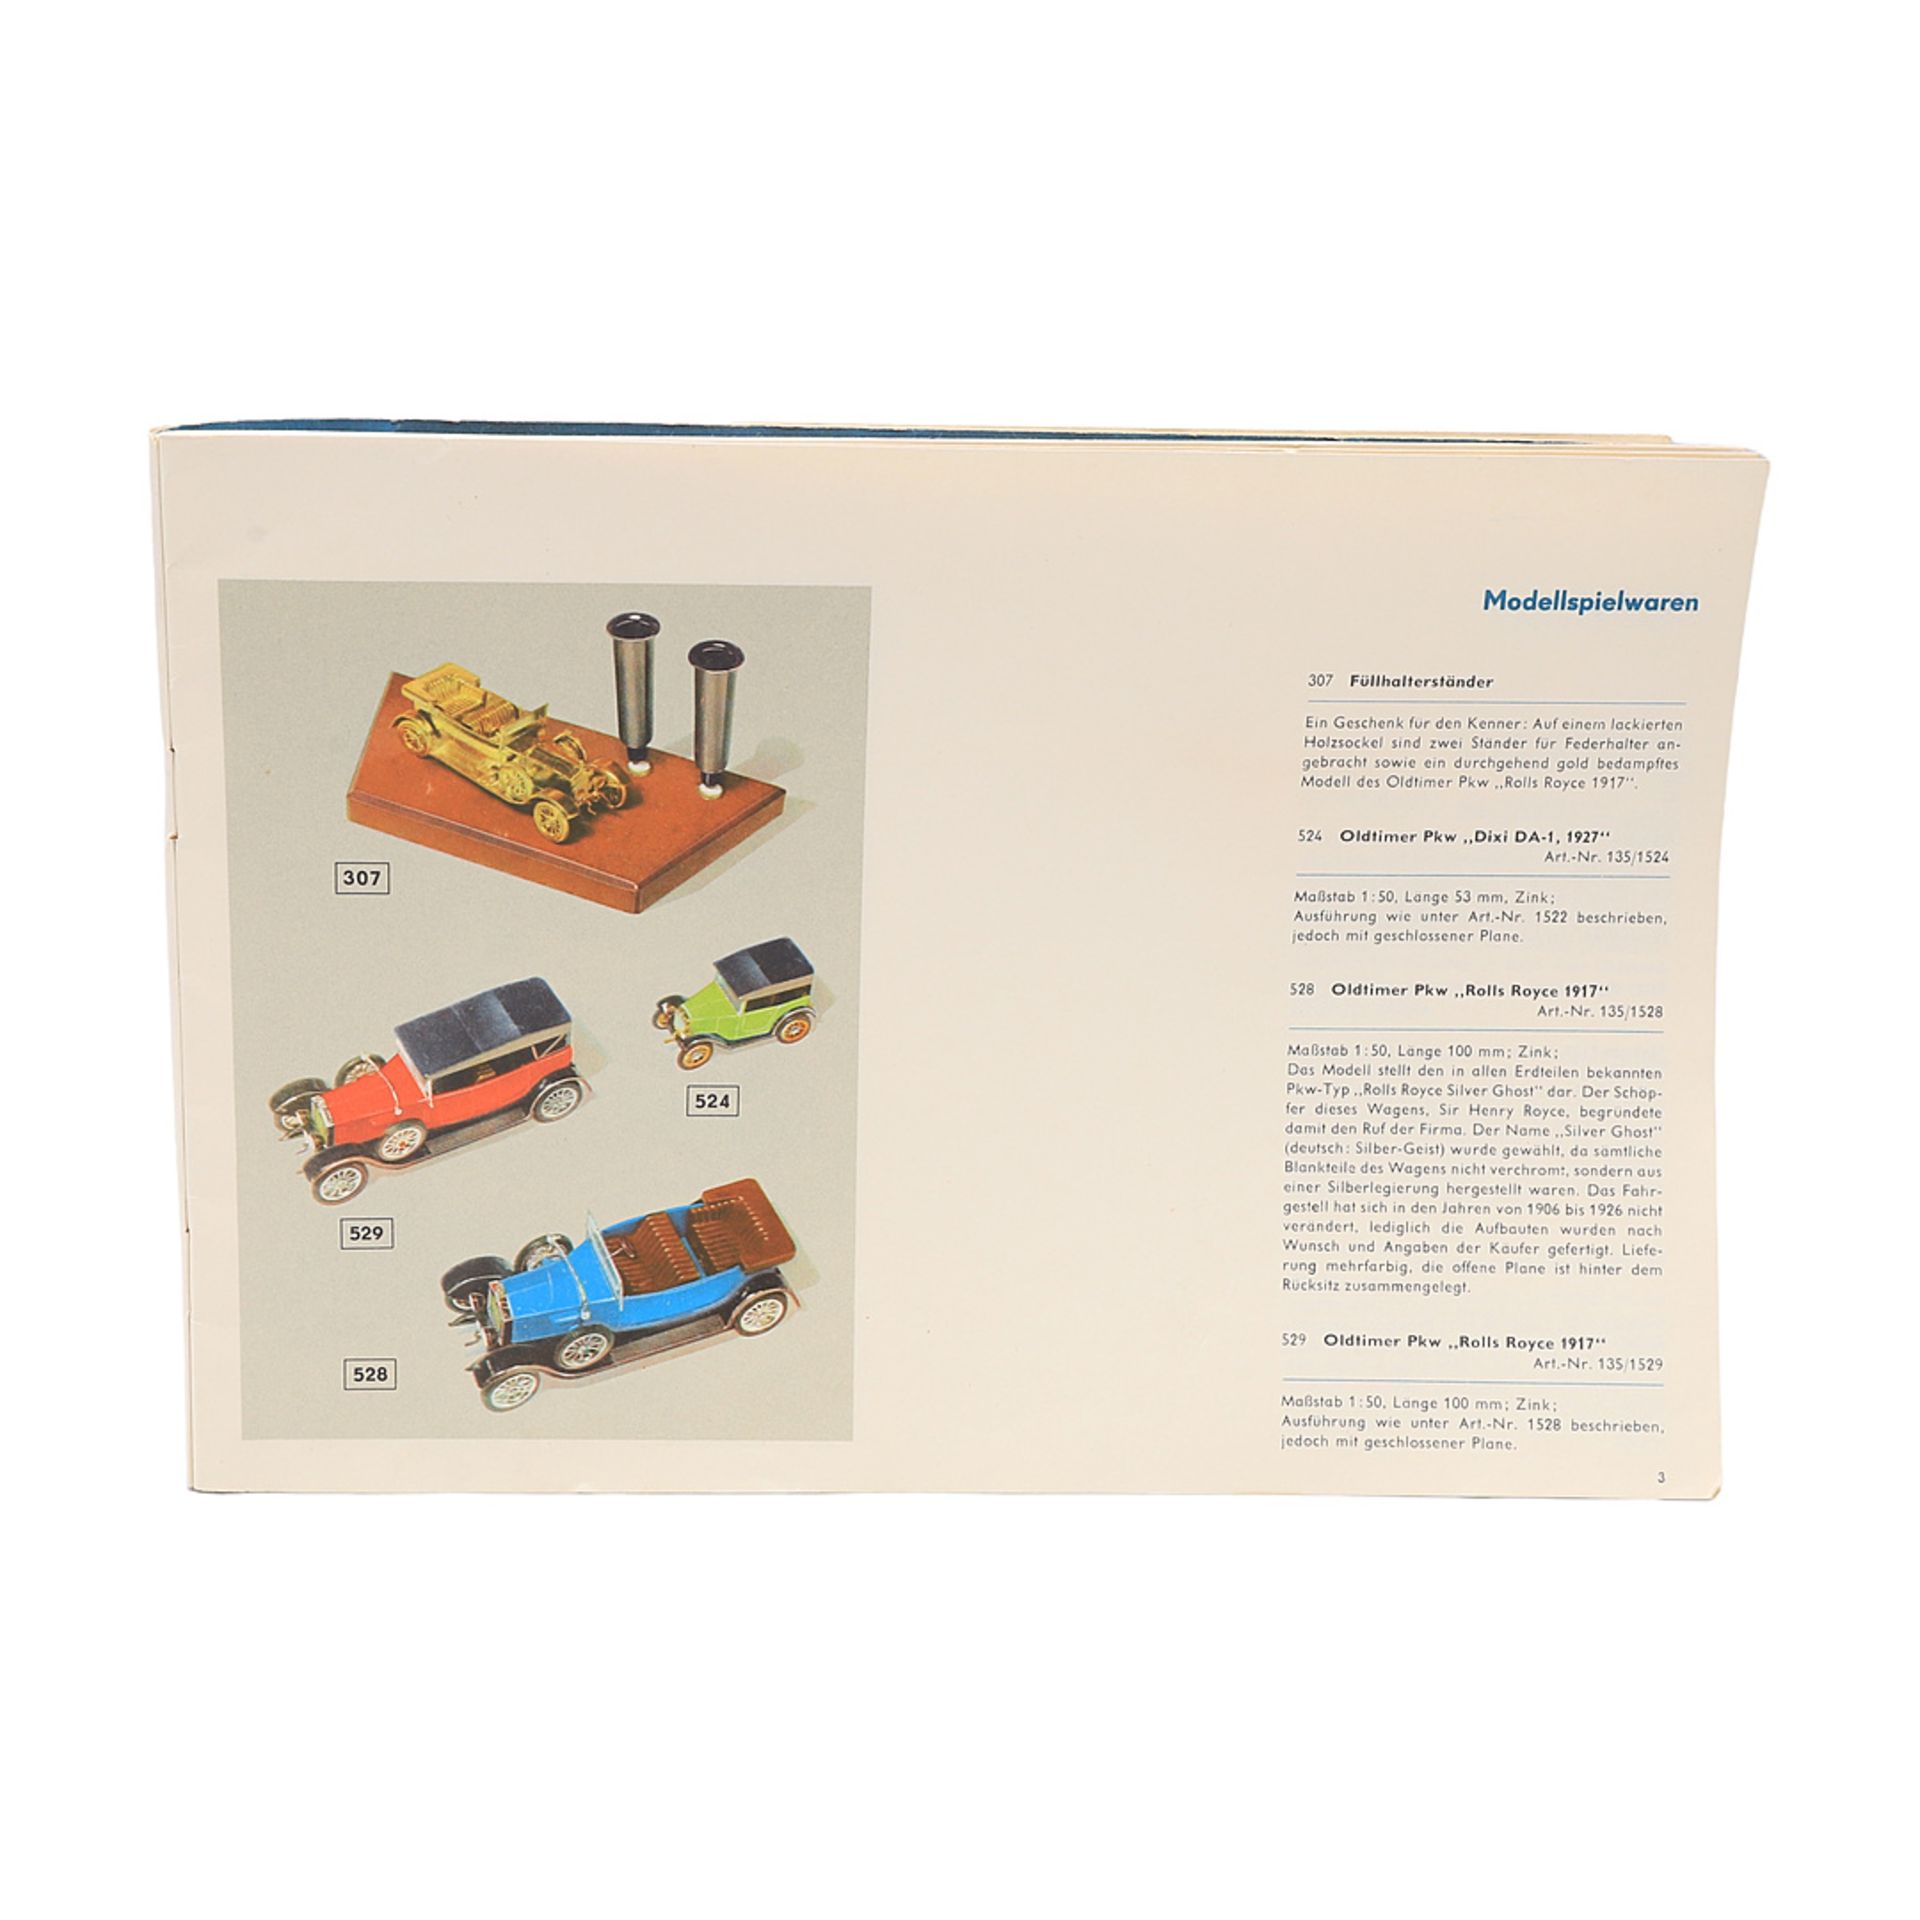 Catalog of the Modellspielwaren-Kombinat Annaberg-Buchholz, around 1970 - Image 2 of 3